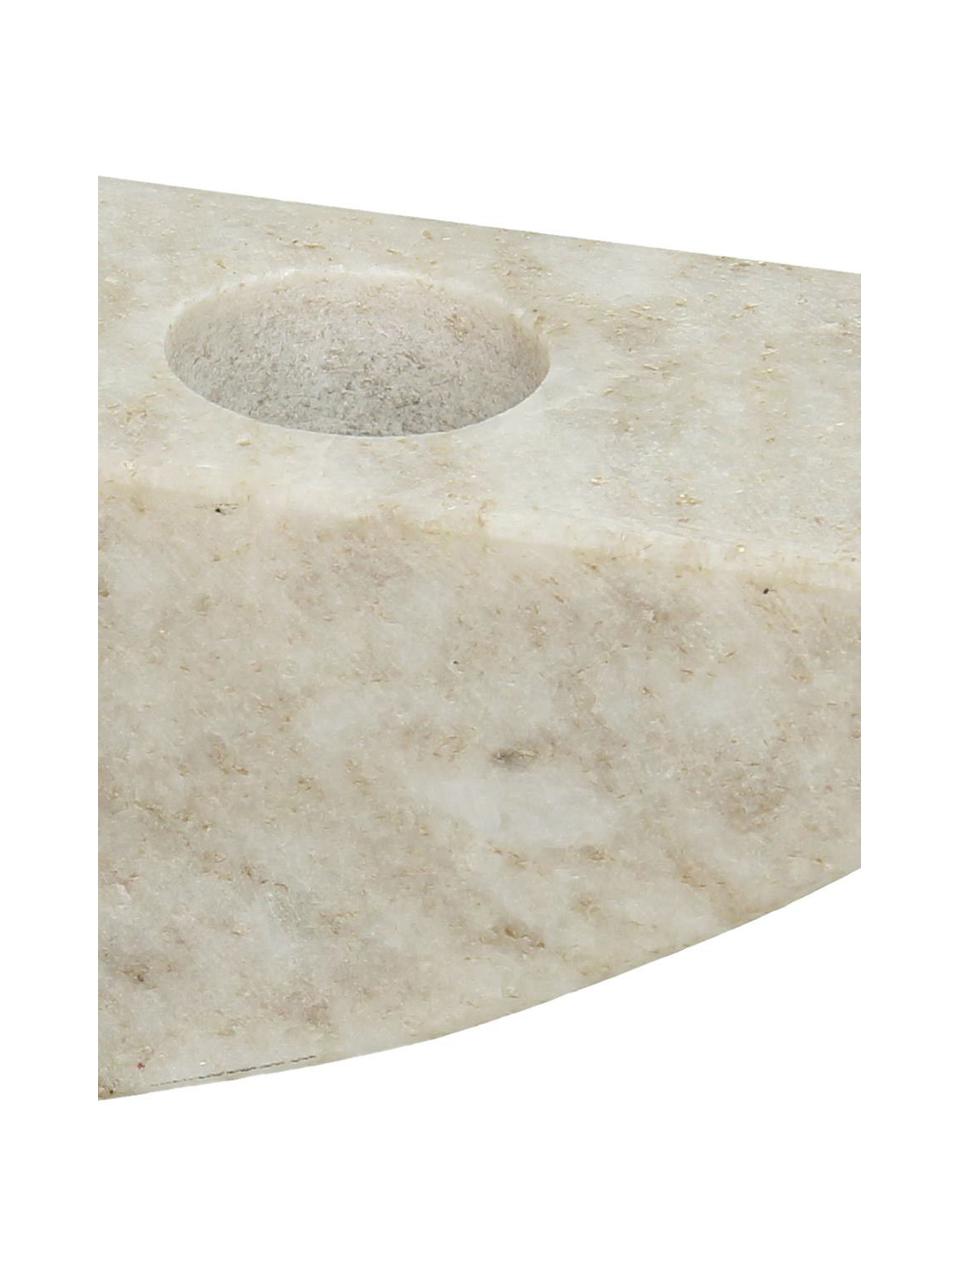 Portacandele in marmo Mar, Marmo, Beige marmorizzato, Larg. 17 x Alt. 4 cm